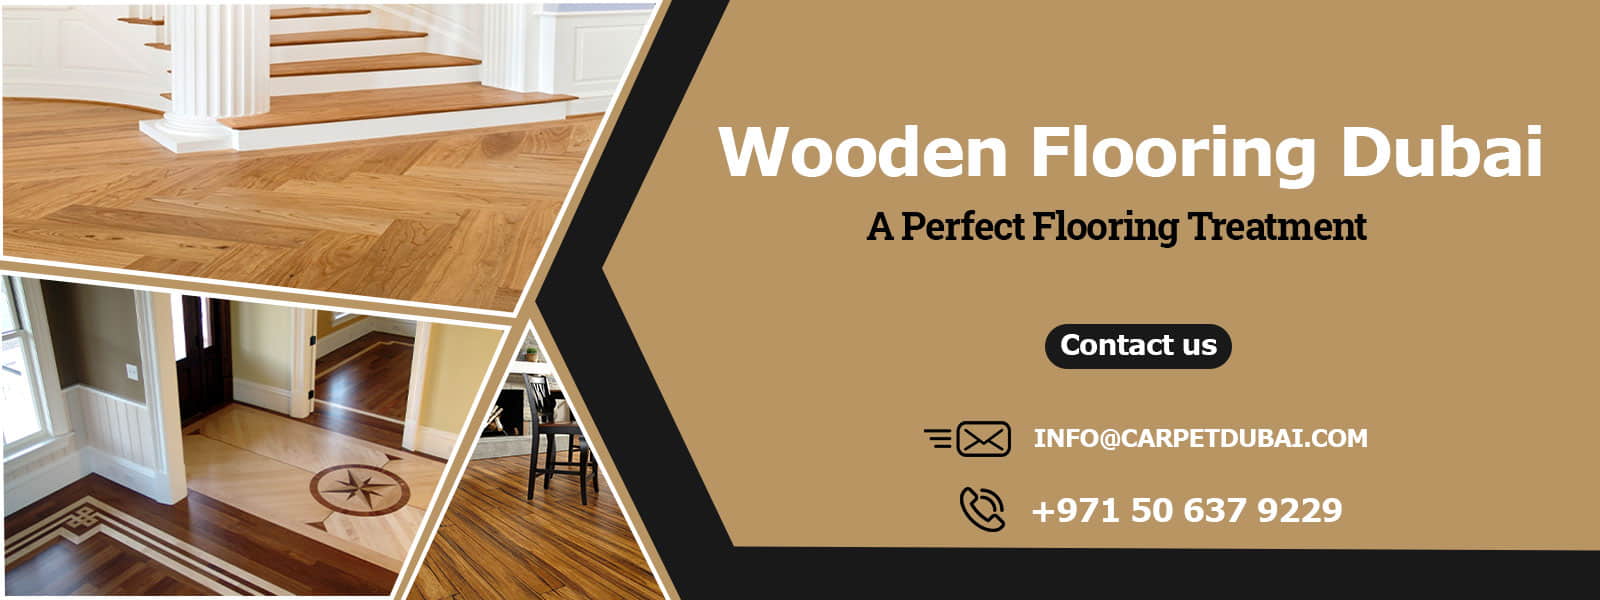 Wooden-Flooring-Dubai banner